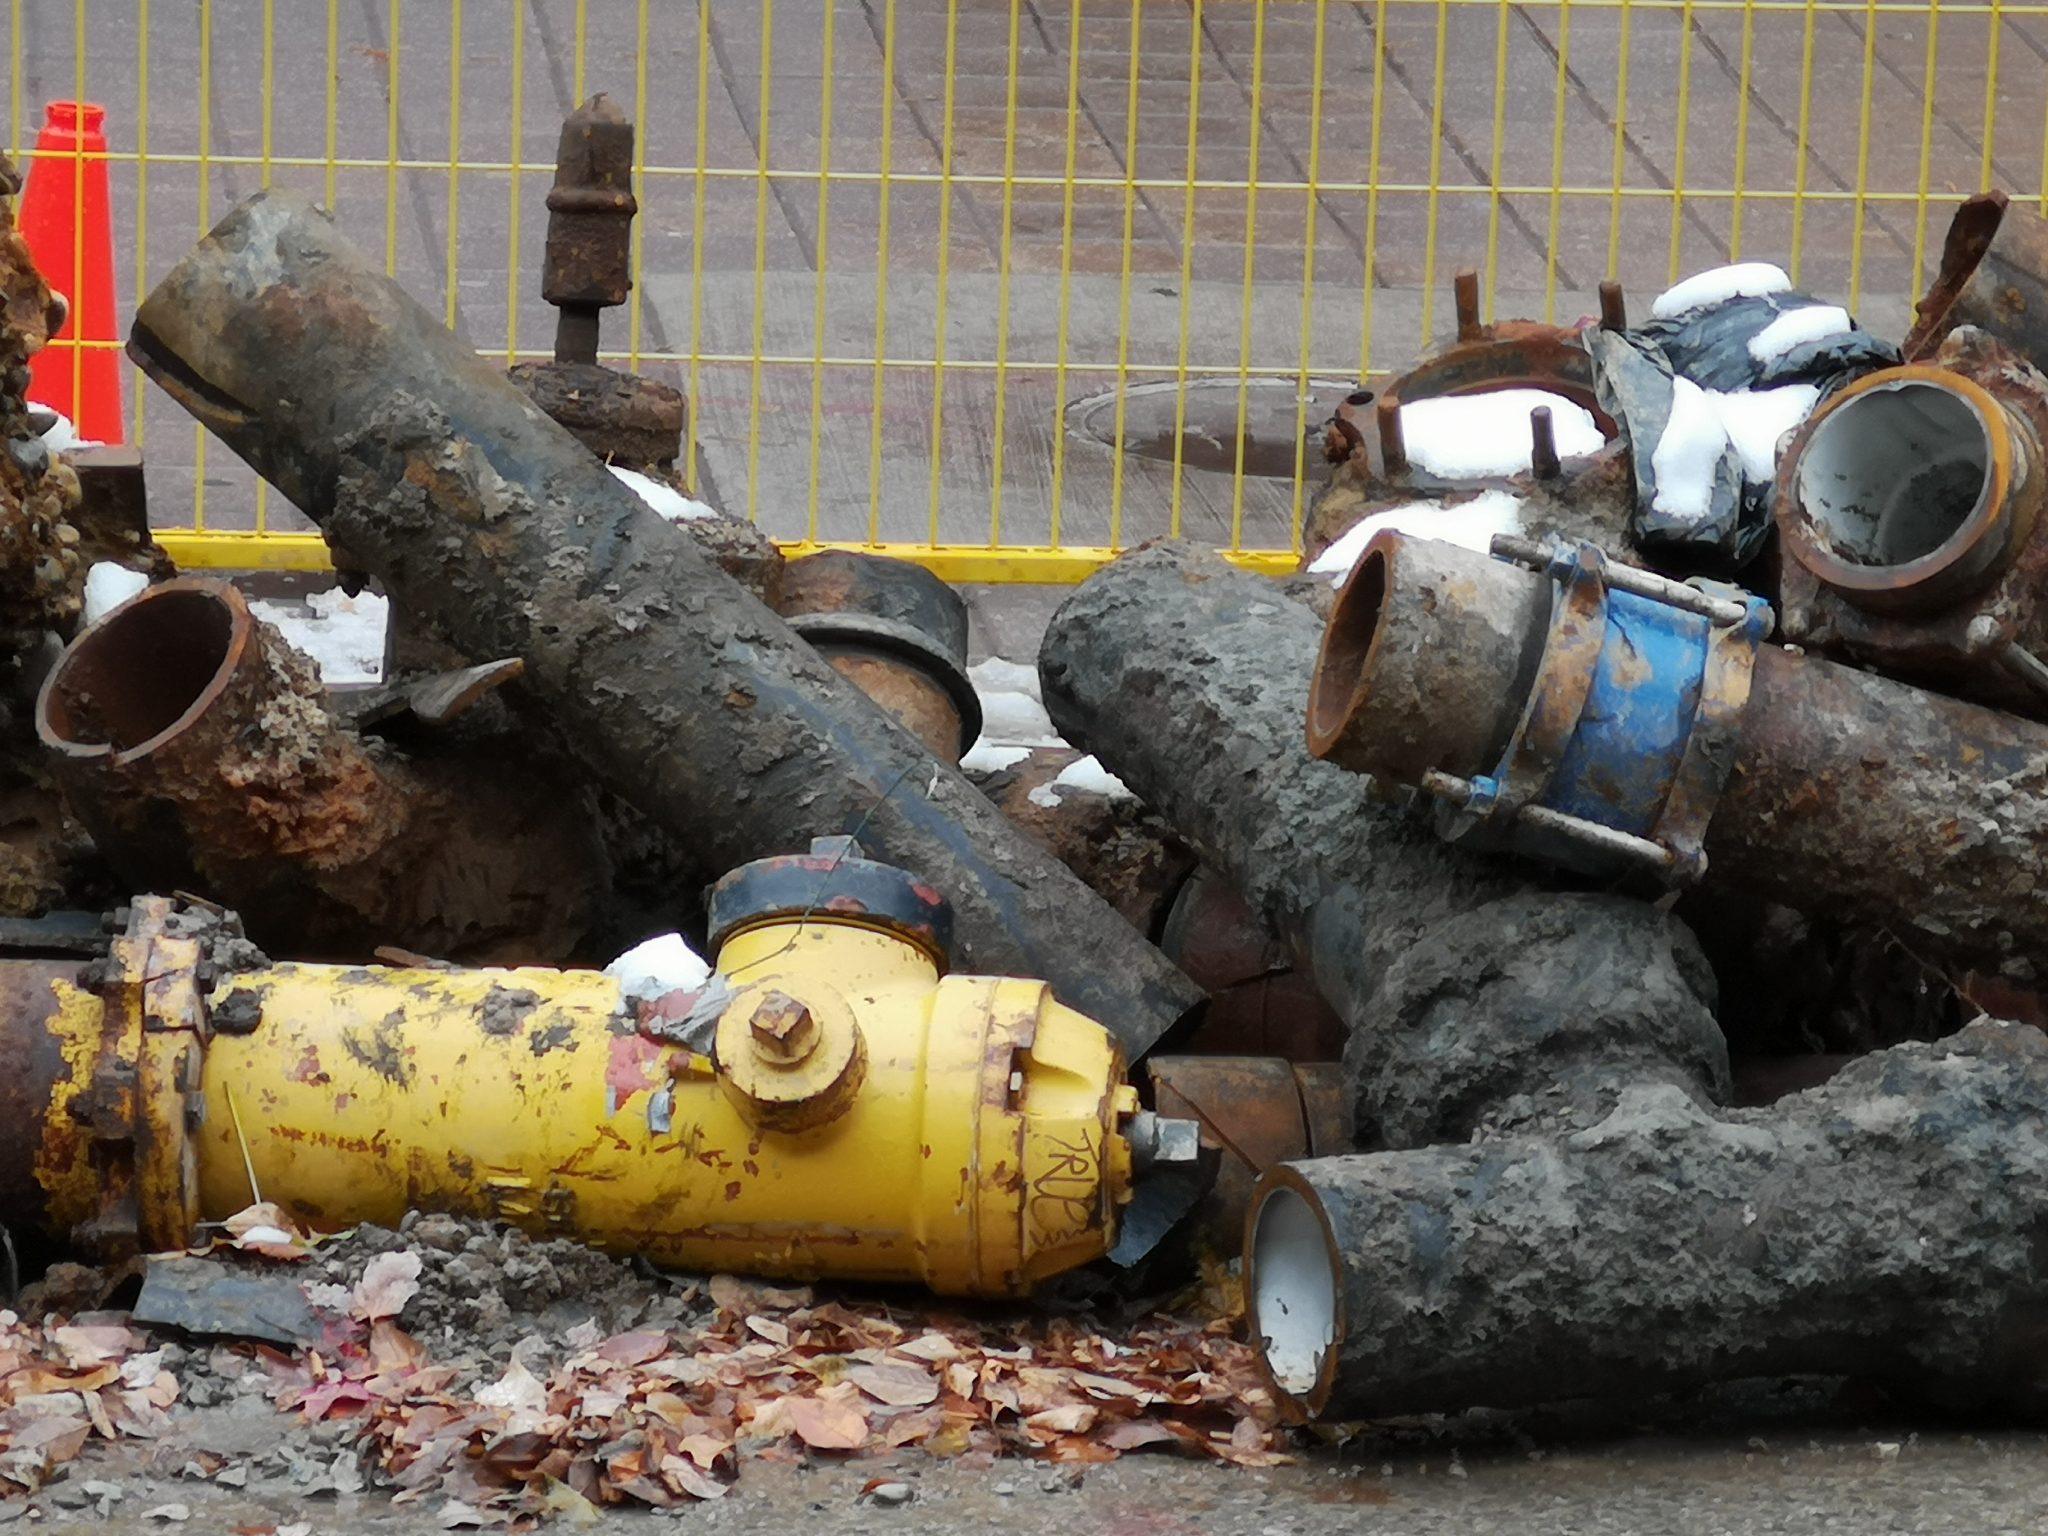 broken concrete pillars and fire hydrants